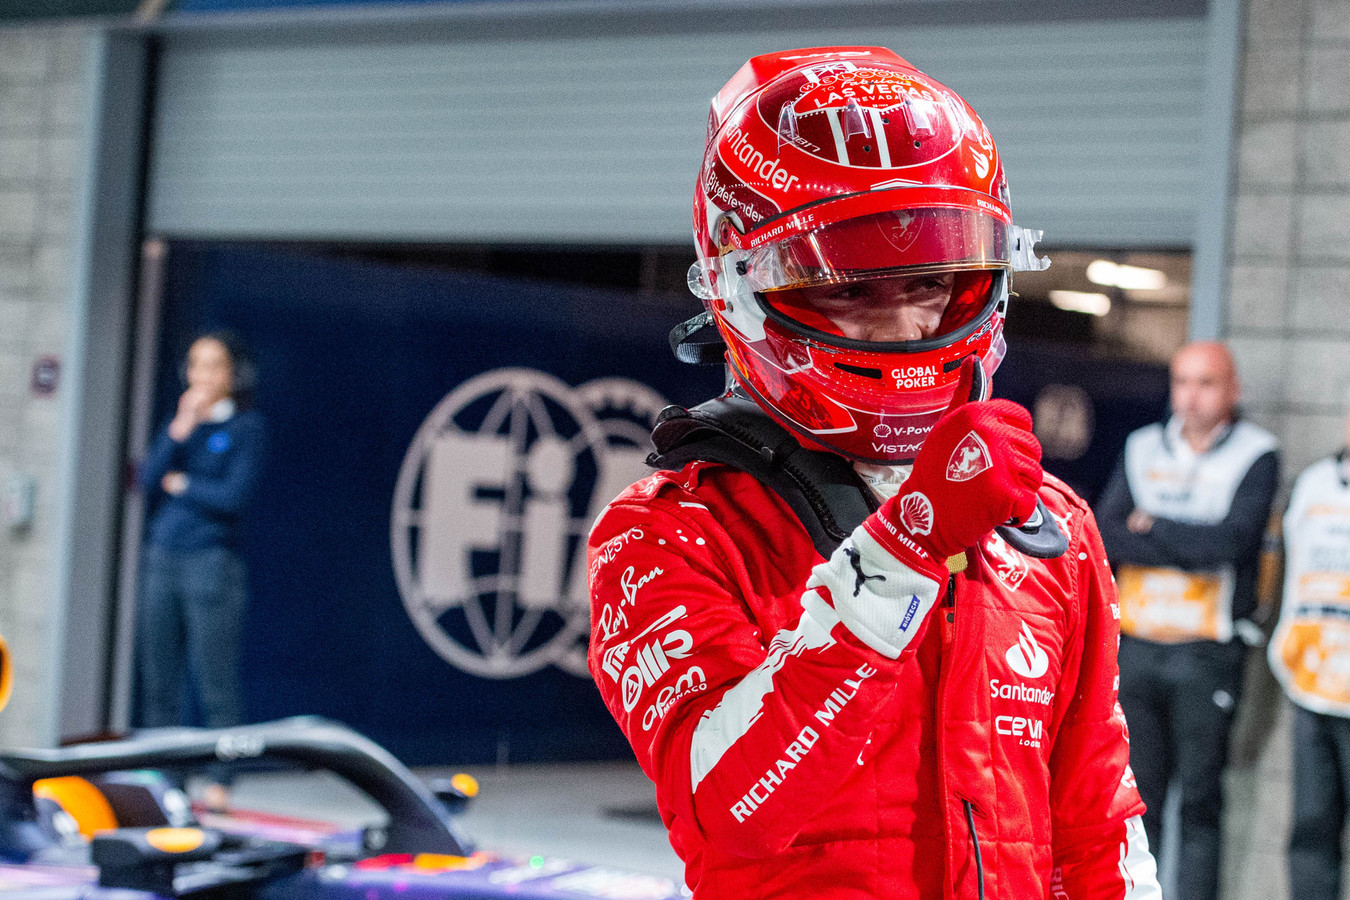 Charles Leclerc of Ferrari celebrates winning pole position at the Las Vegas Street Circuit ahead of the Las Vegas Grand Prix (Source: Scuderia Ferrari)